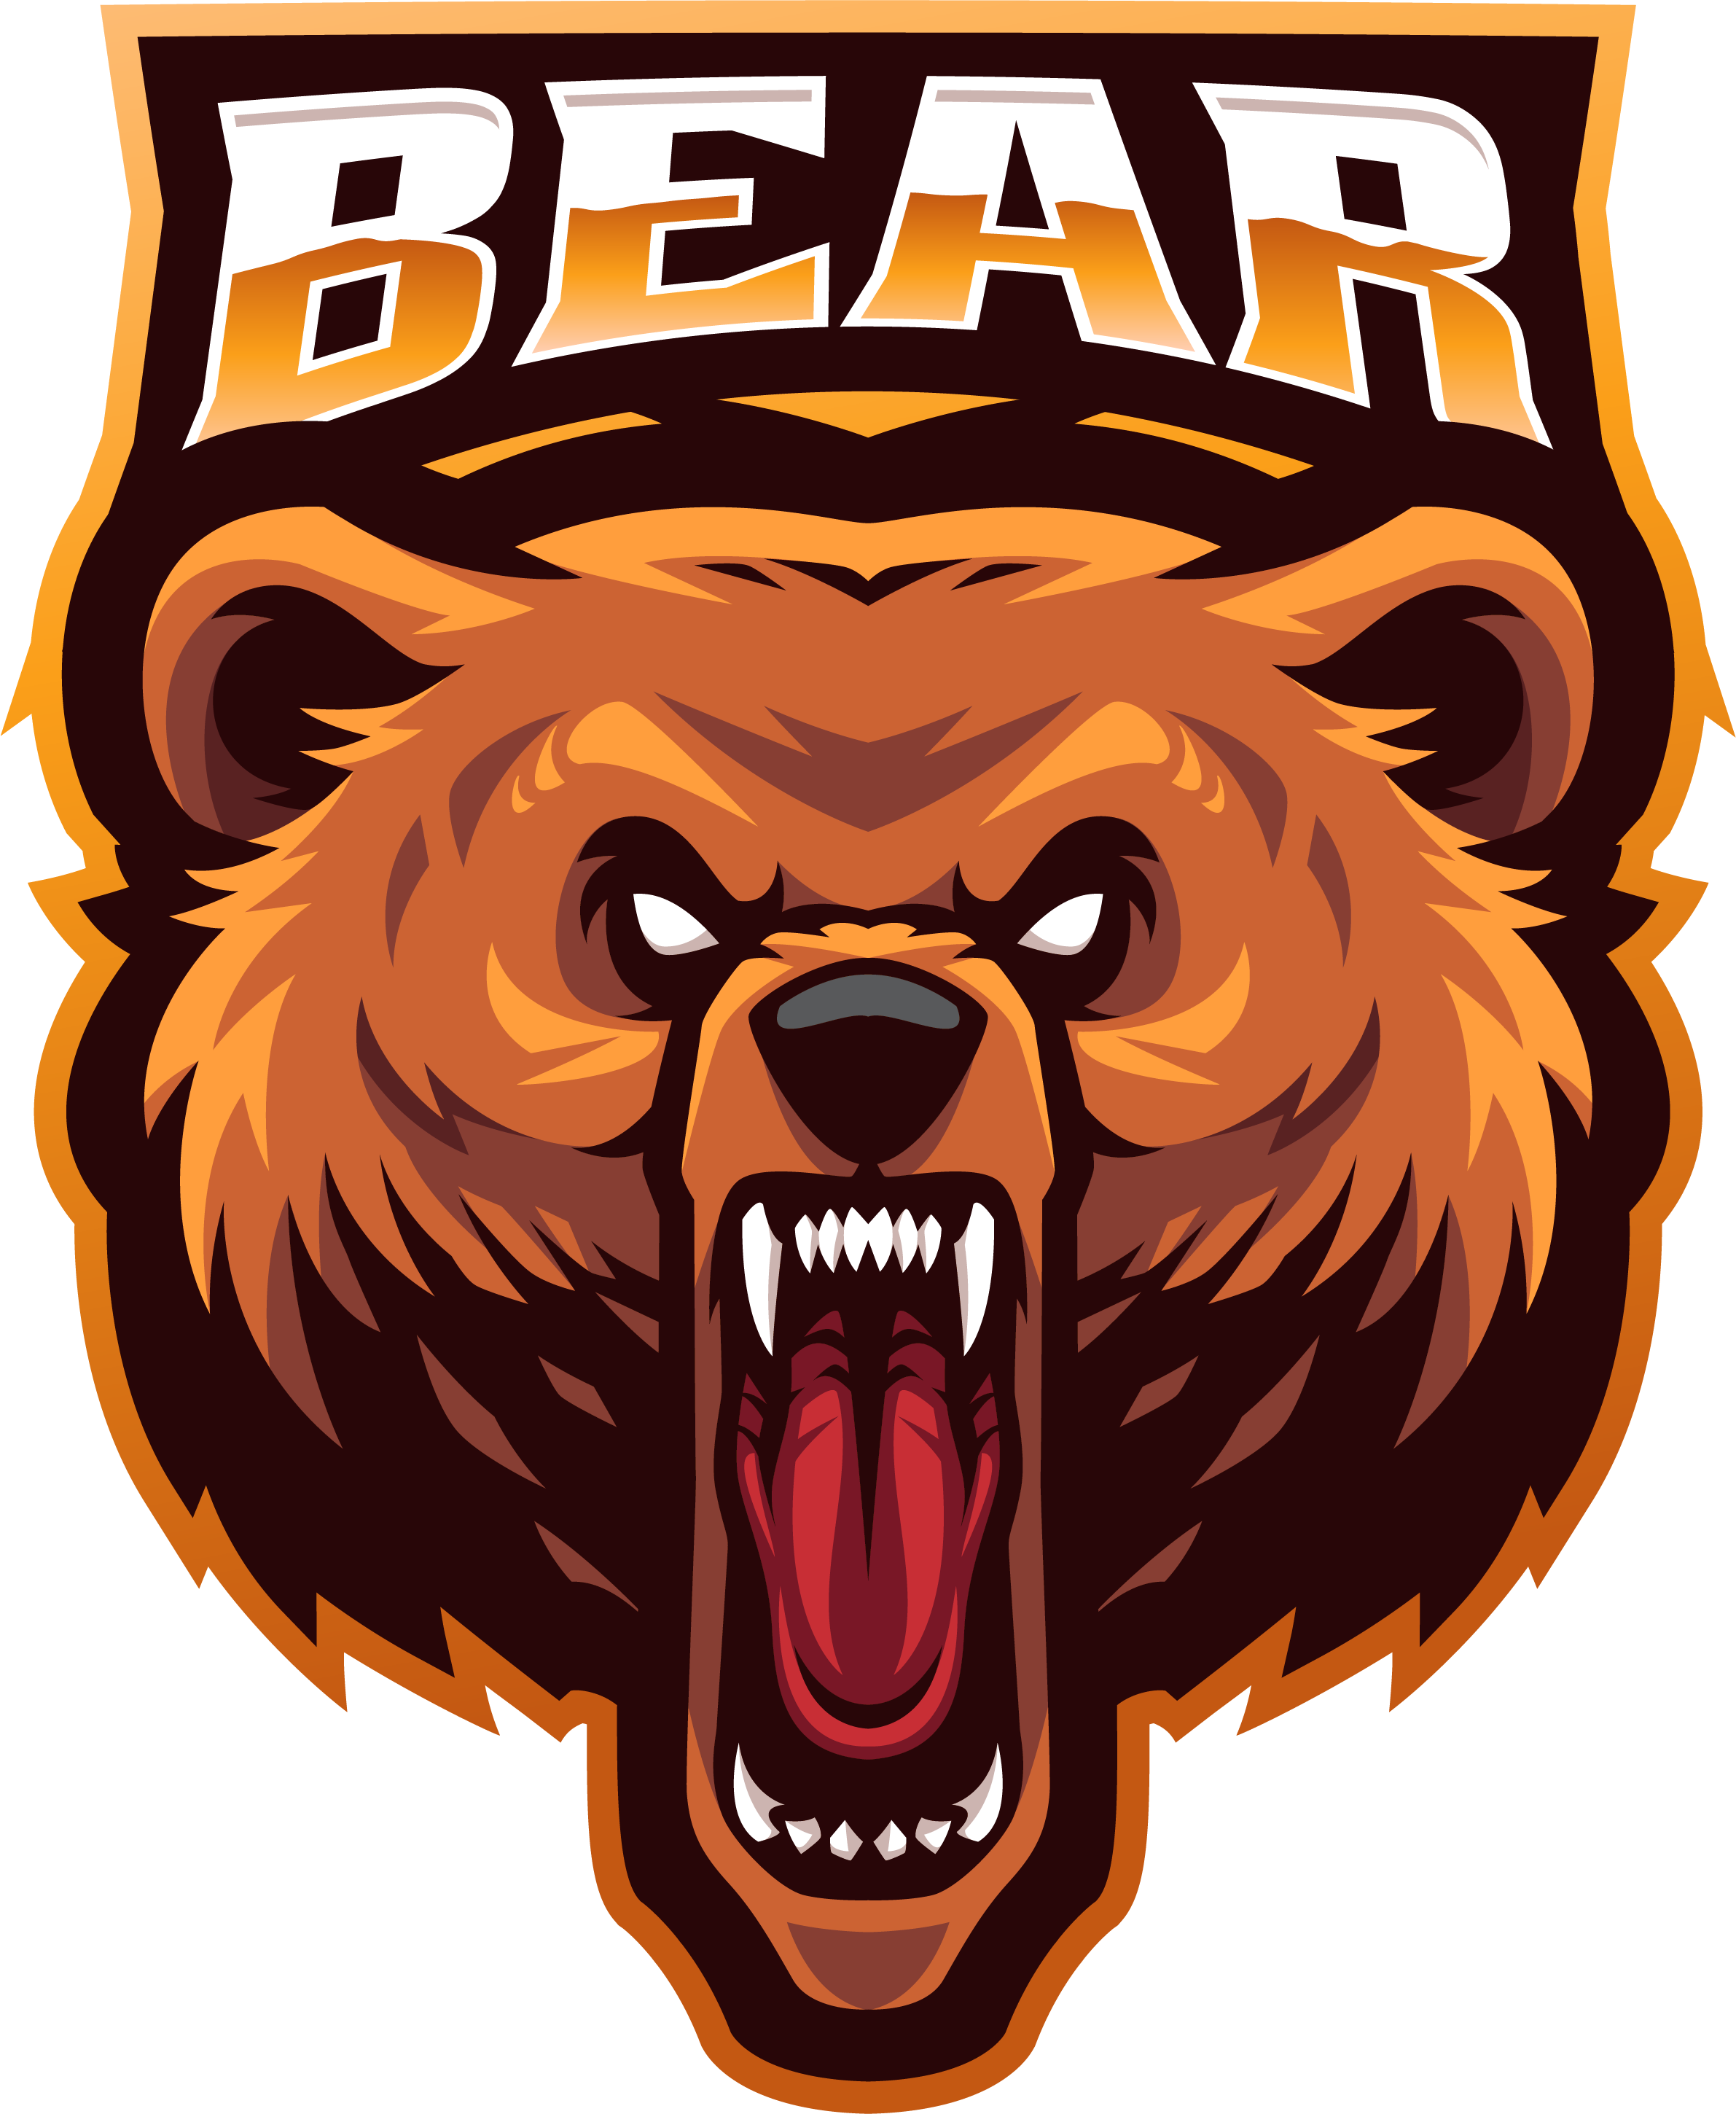 Bear head esport mascot logo design By Visink | TheHungryJPEG